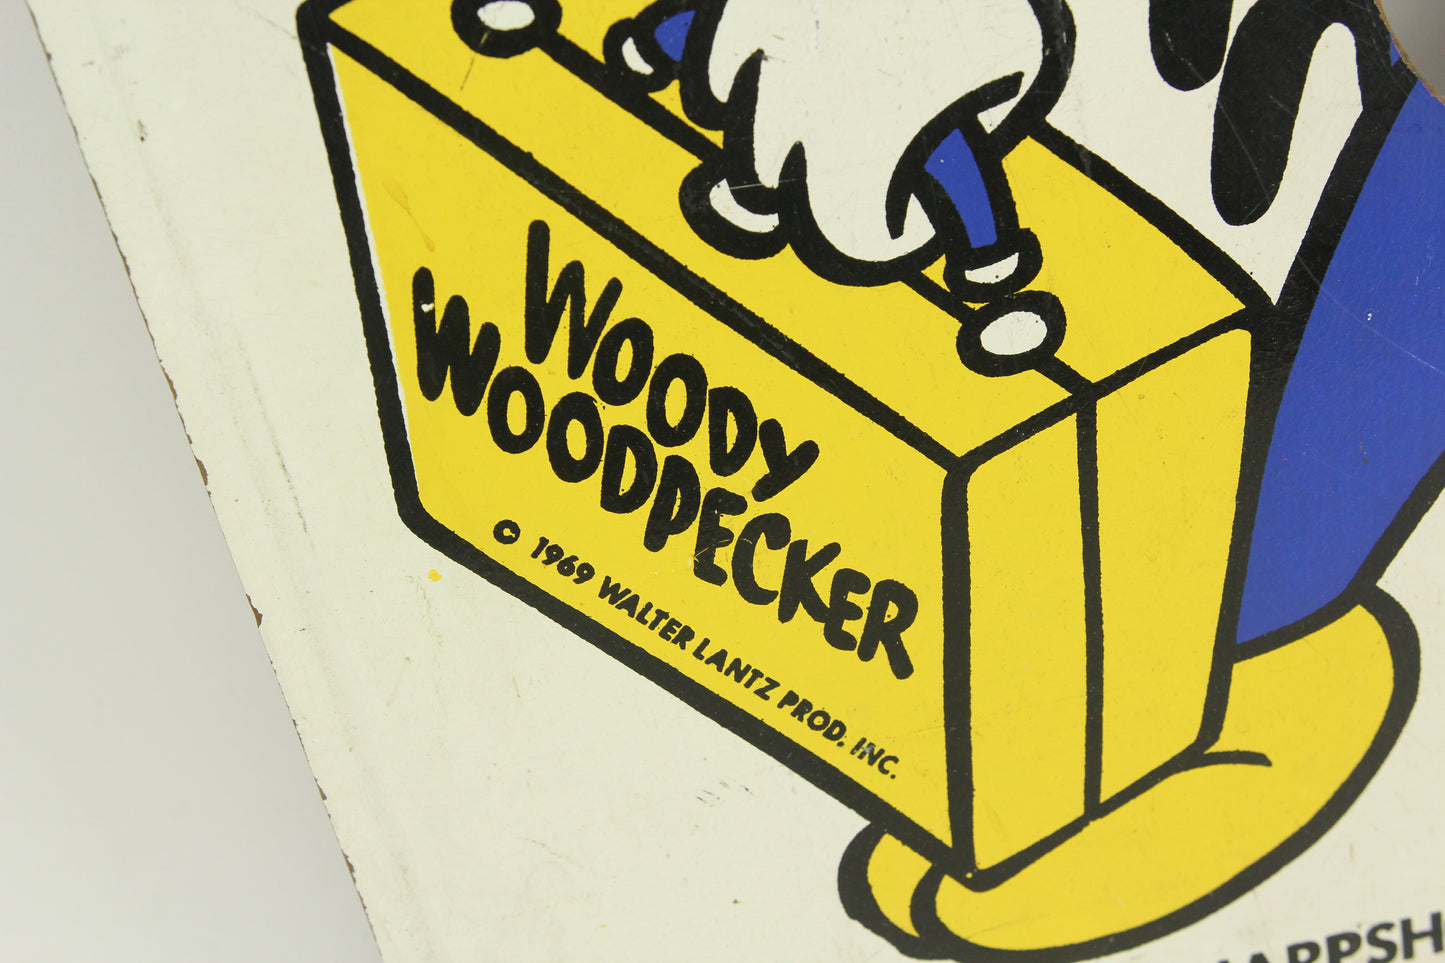 Woody Woodpecker Bean Bag Toss Game Masonite Panel, 1969 - 16 x 24"